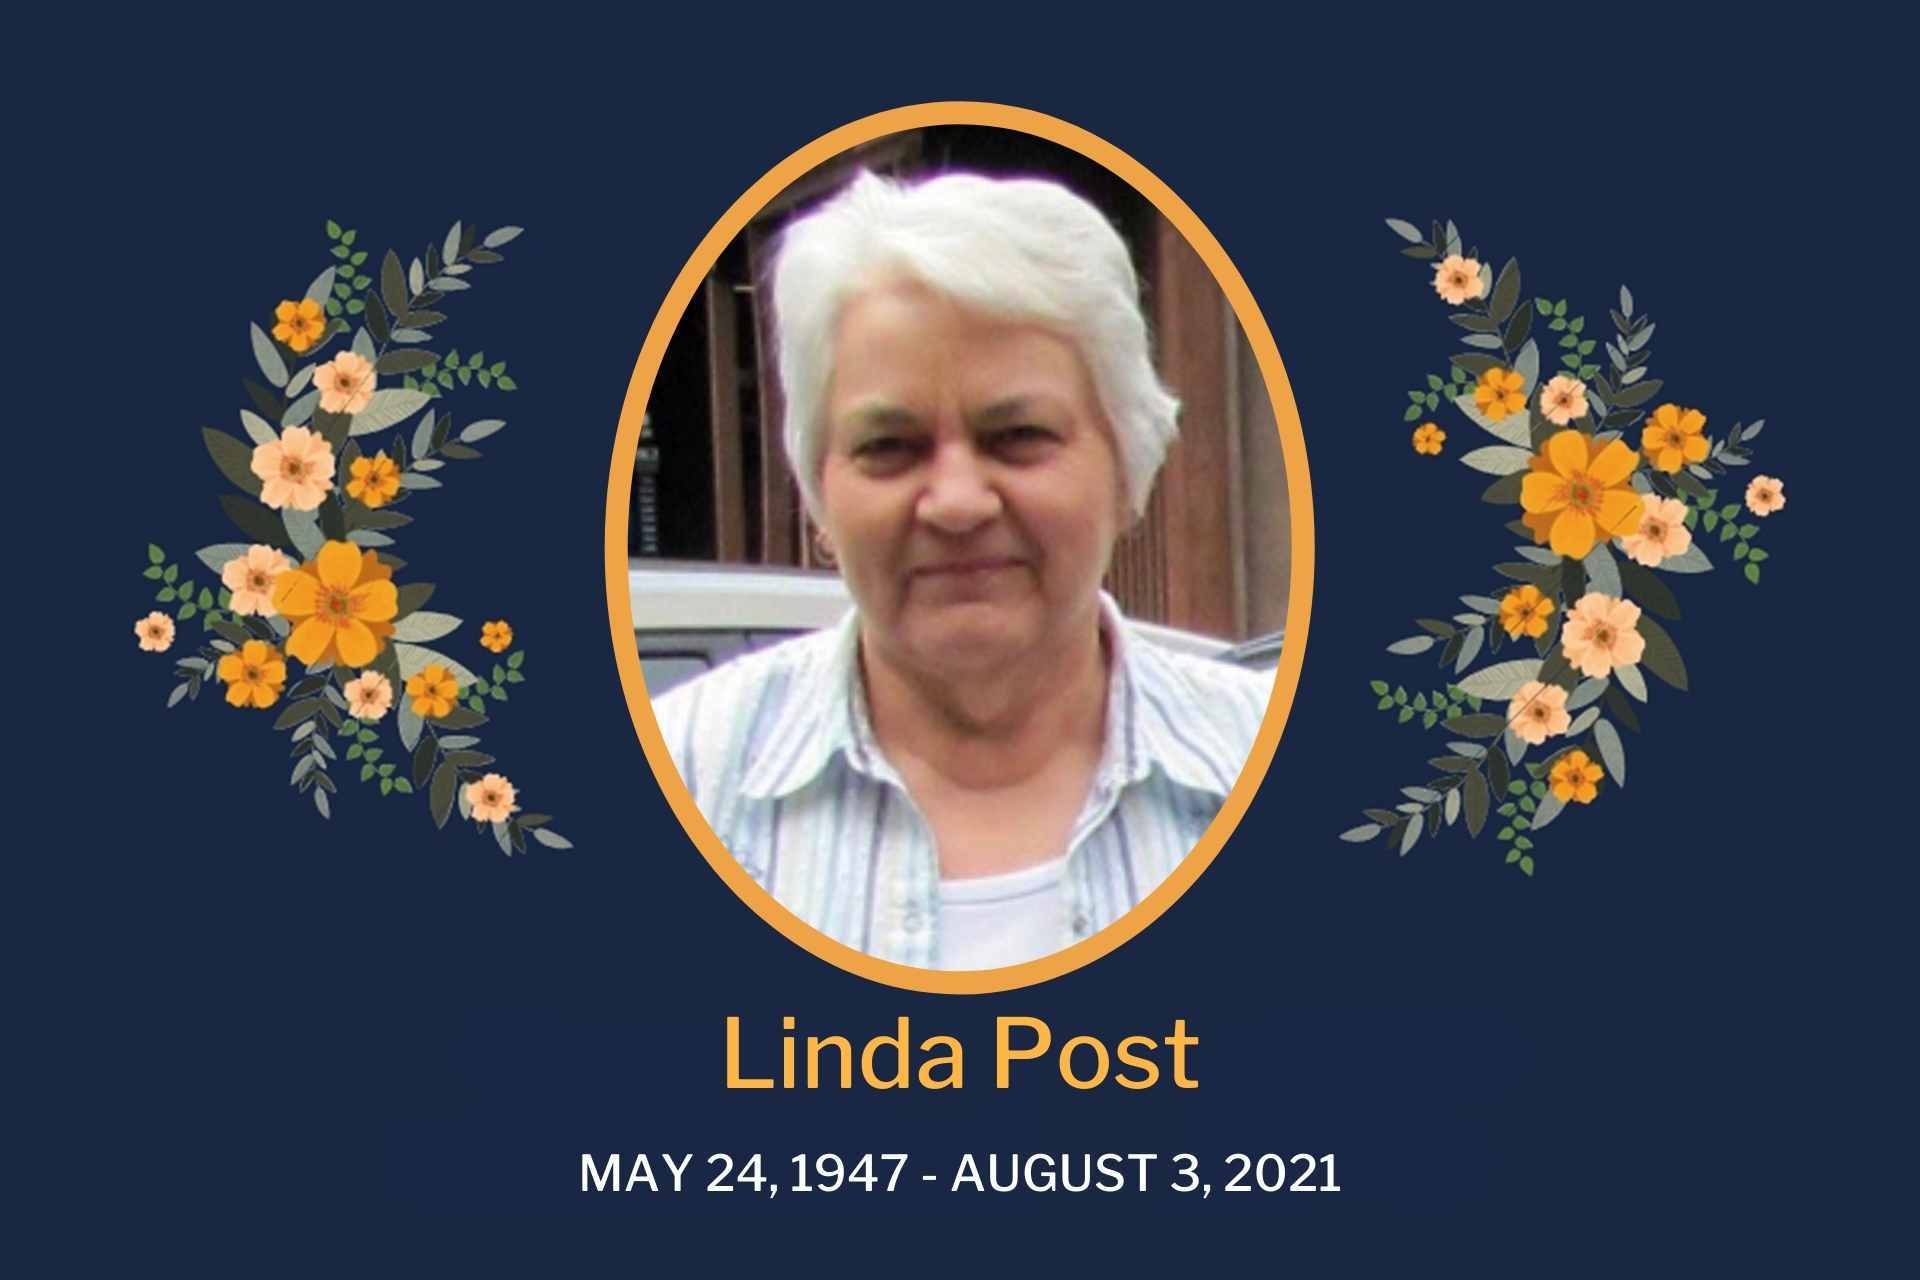 Obituary Linda Post